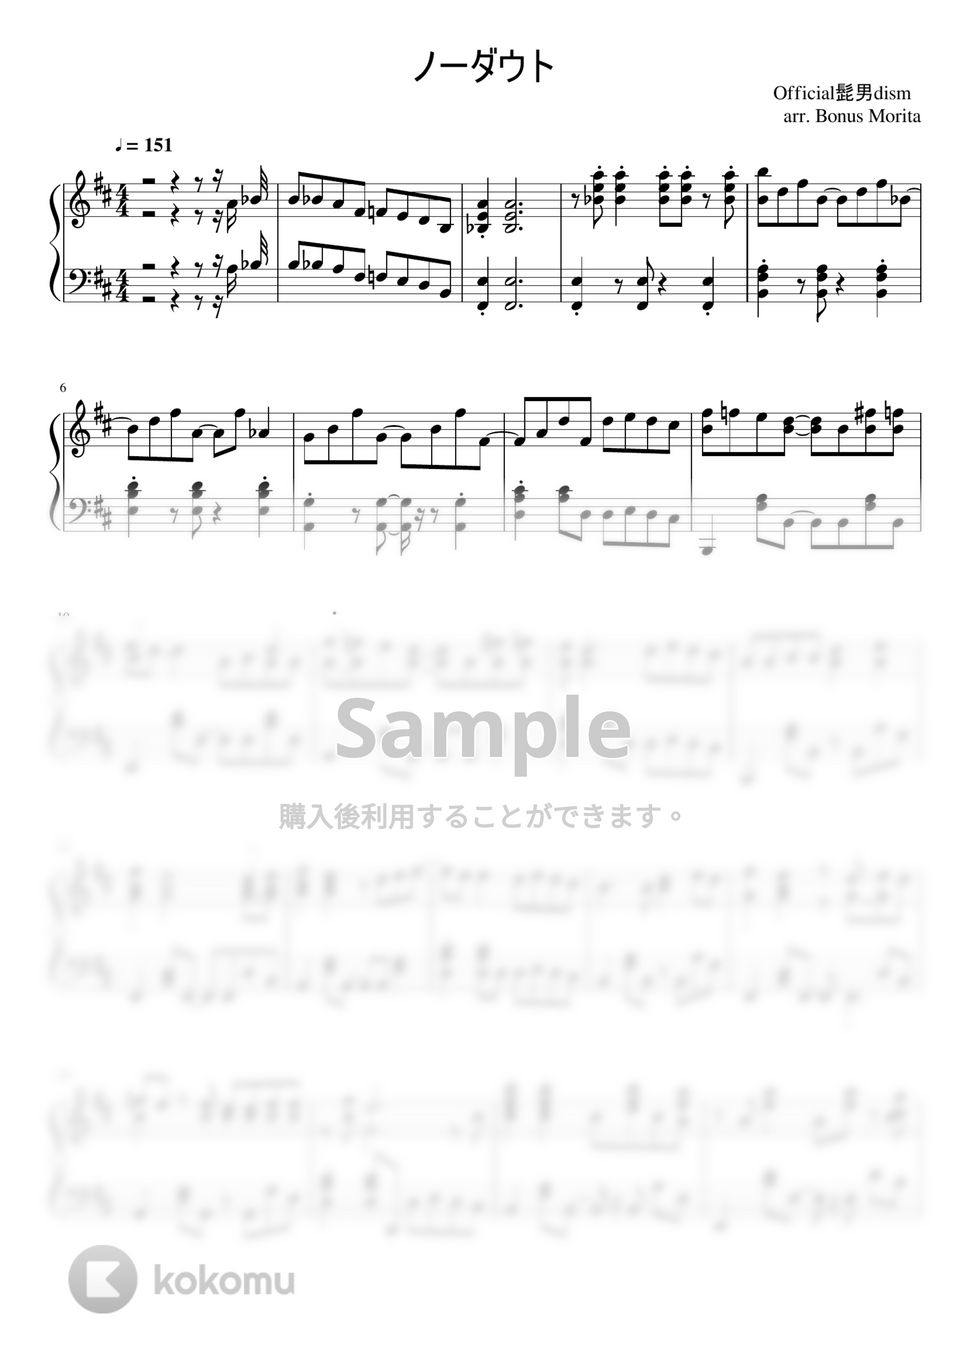 Official髭男dism - ノーダウト (ピアノソロ用楽譜) by ボーナス森田